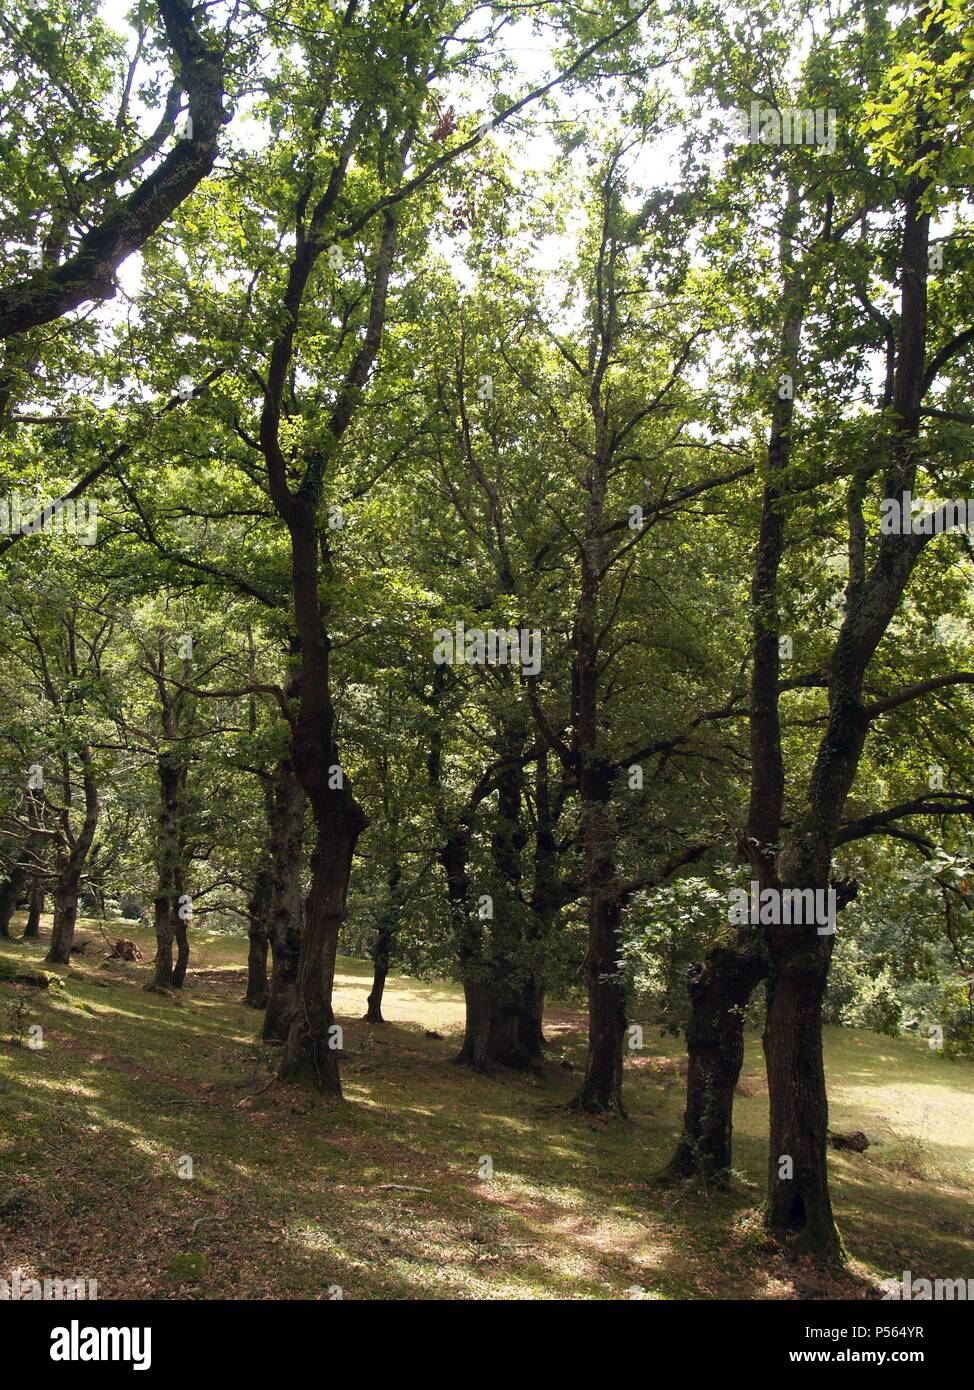 ROBLE ALBAR. (Quercus petraea). Arbol de la familia de las fagáceas. Stock Photo